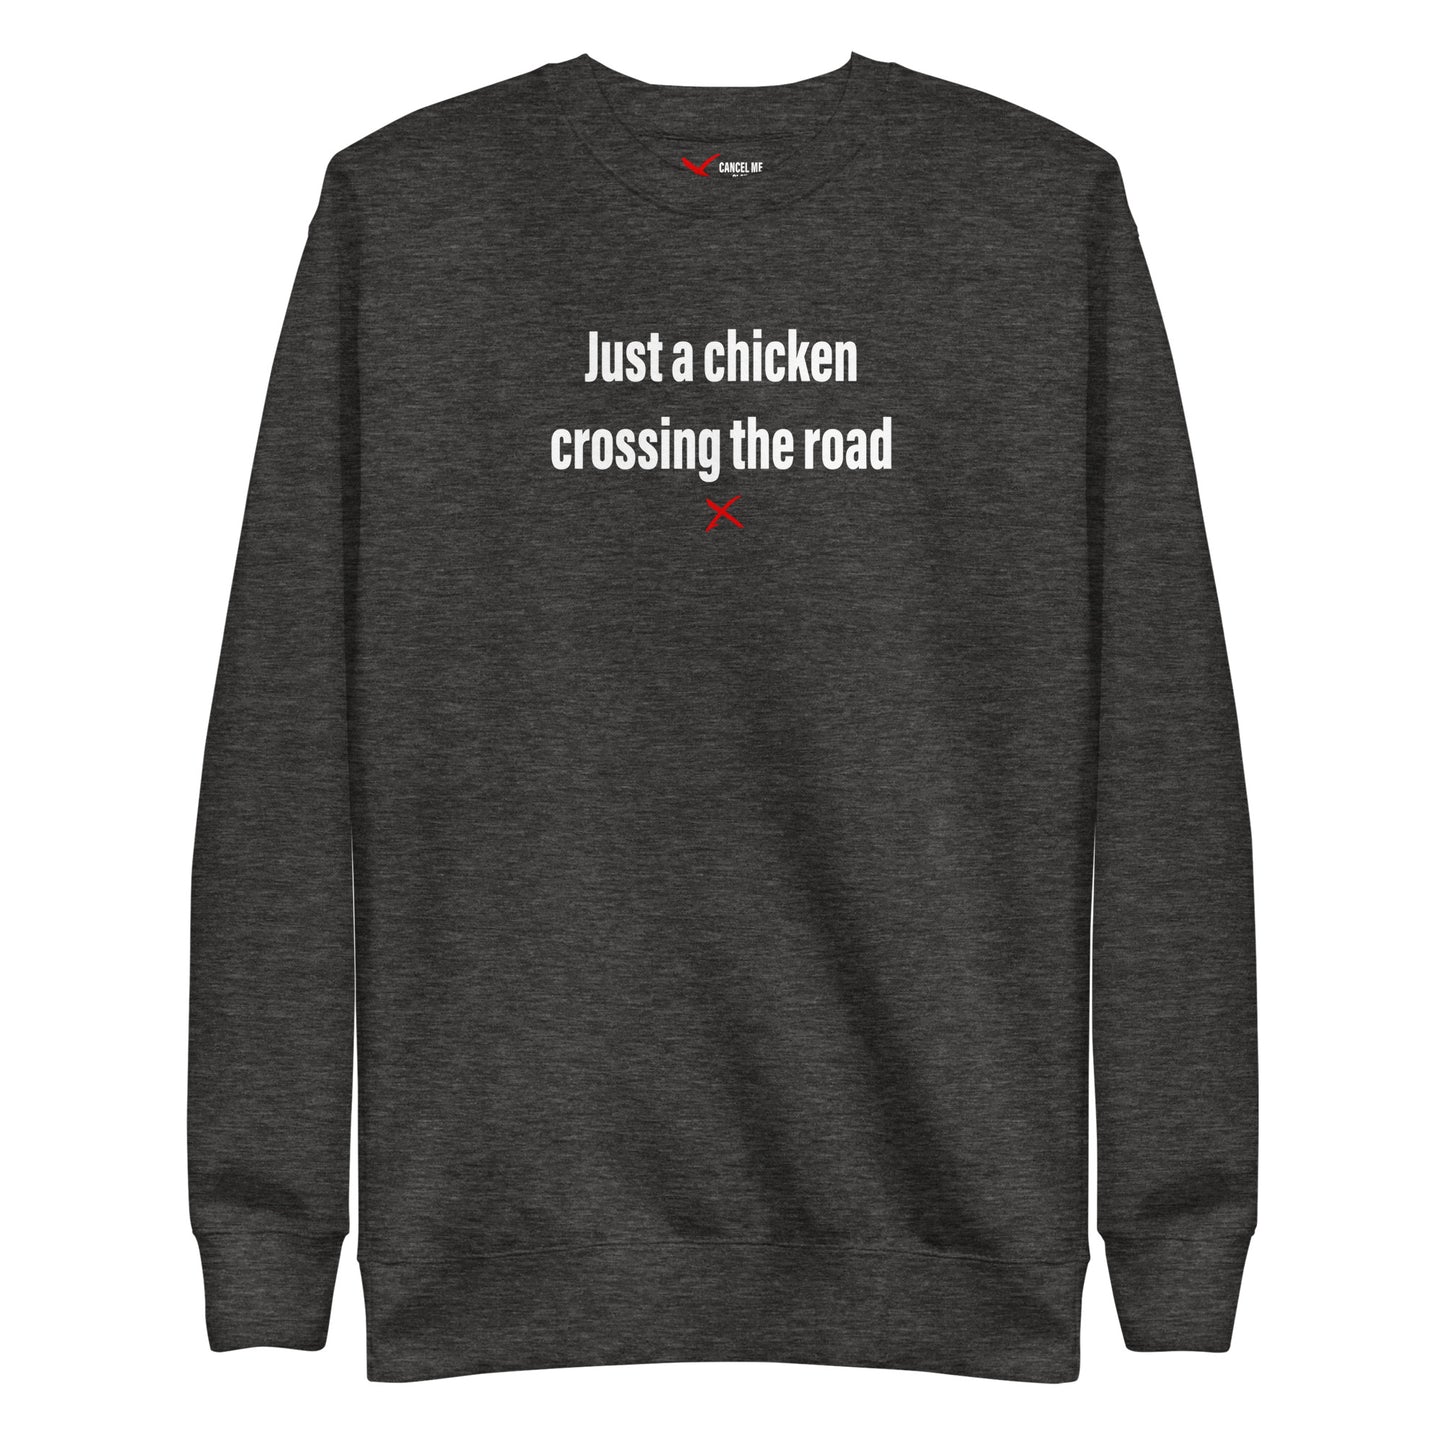 Just a chicken crossing the road - Sweatshirt